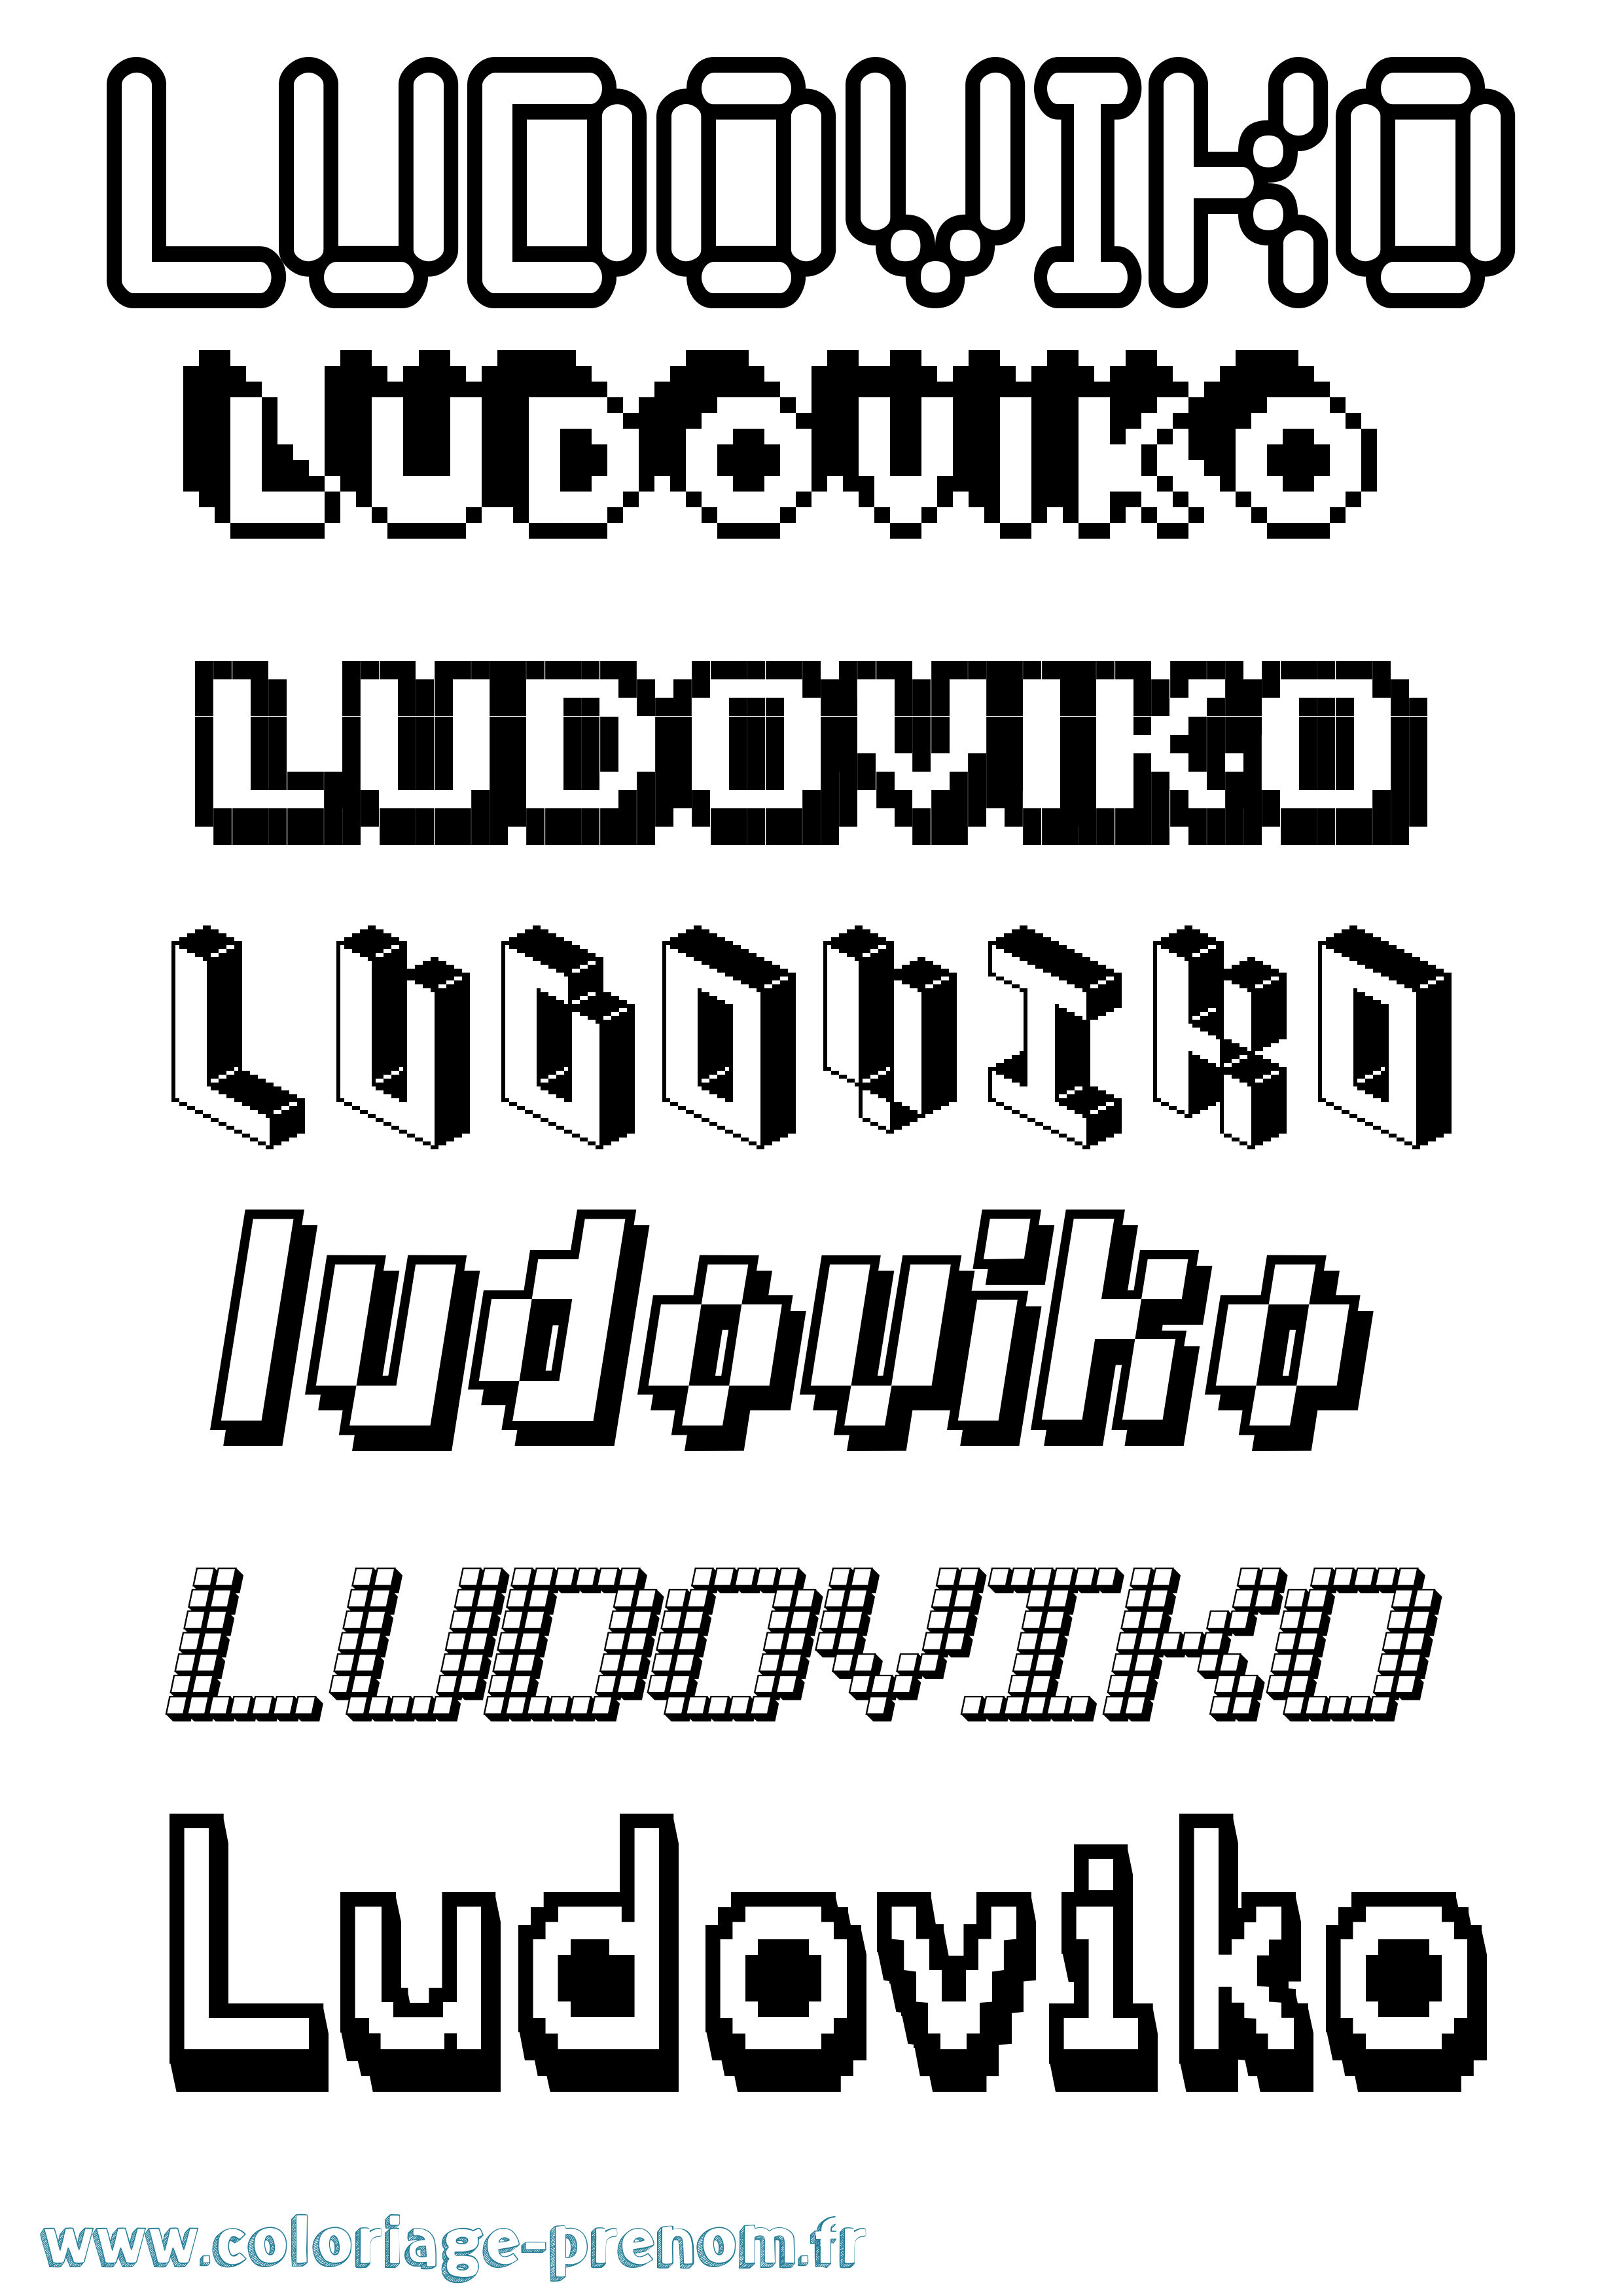 Coloriage prénom Ludoviko Pixel